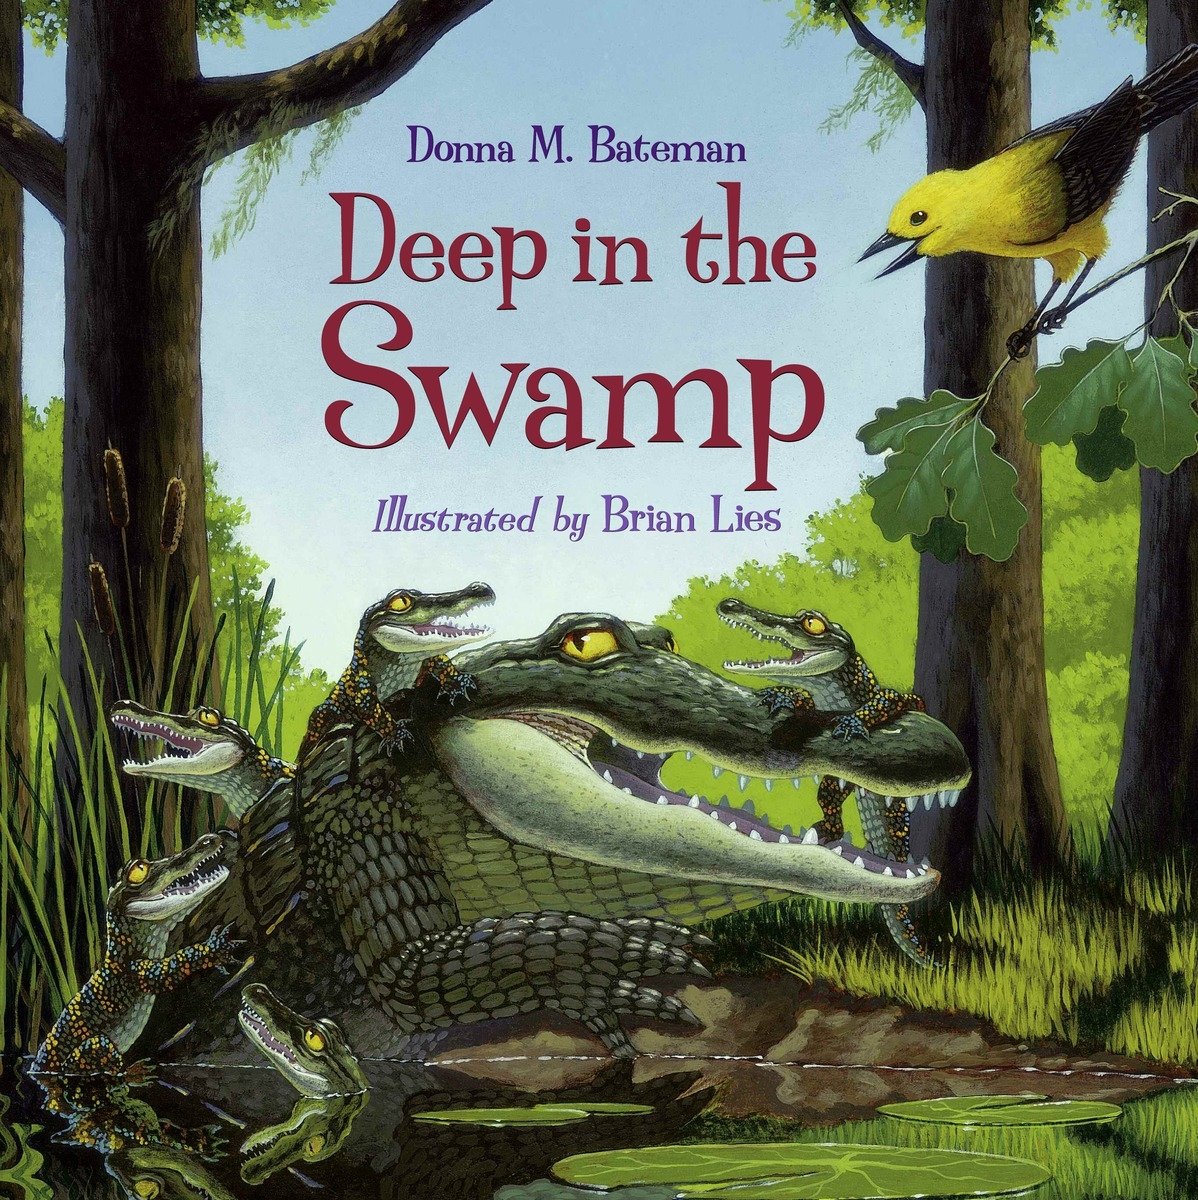 Deep in the Swamp by Donna Bateman